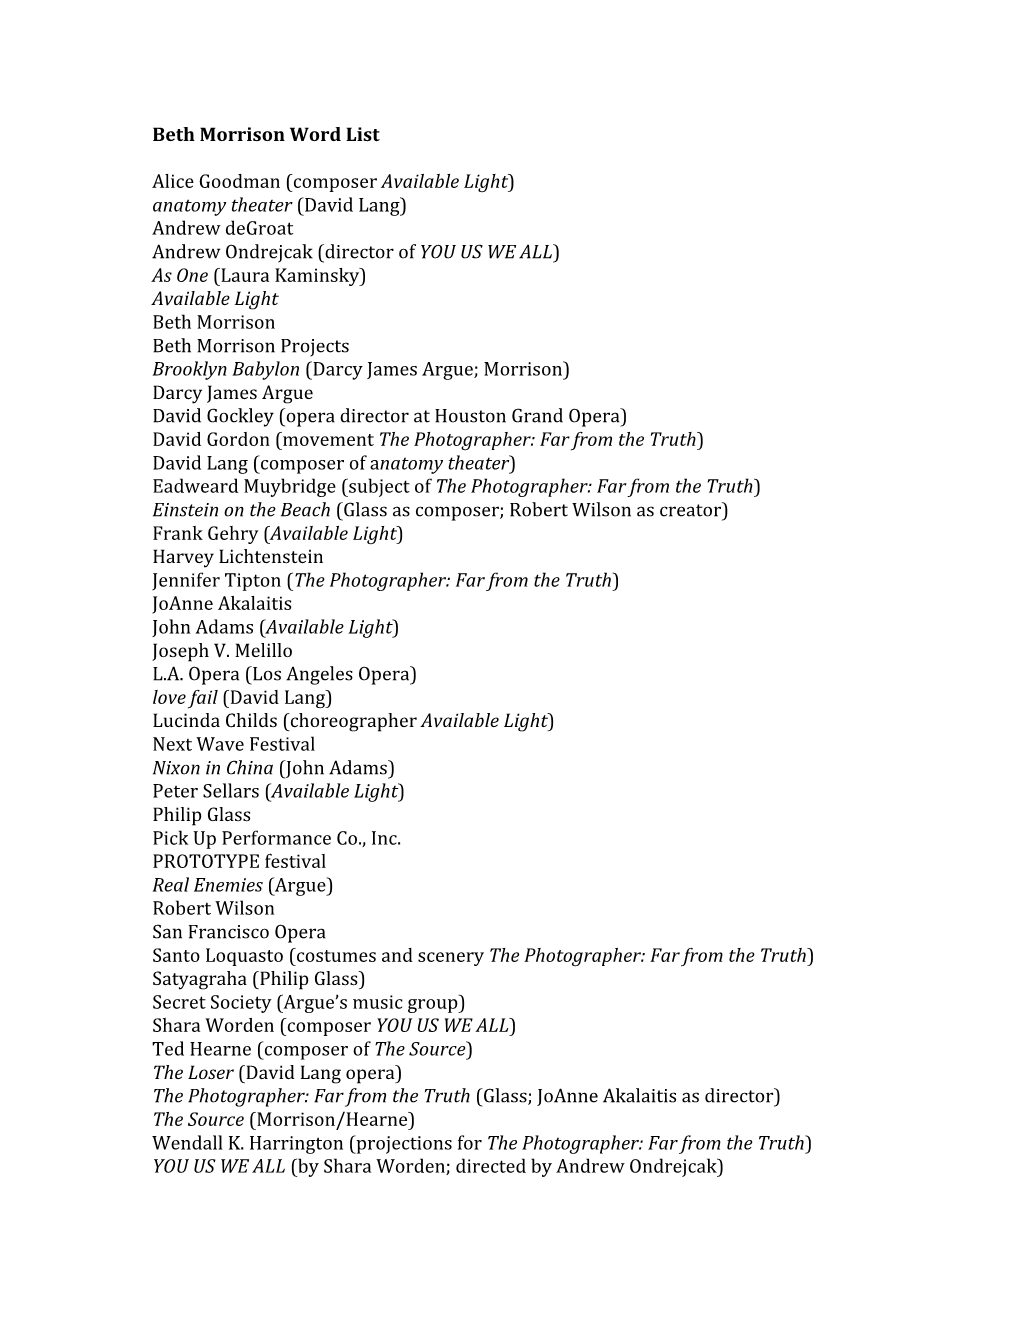 Beth Morrison Word List Alice Goodman (Composer Available Light)